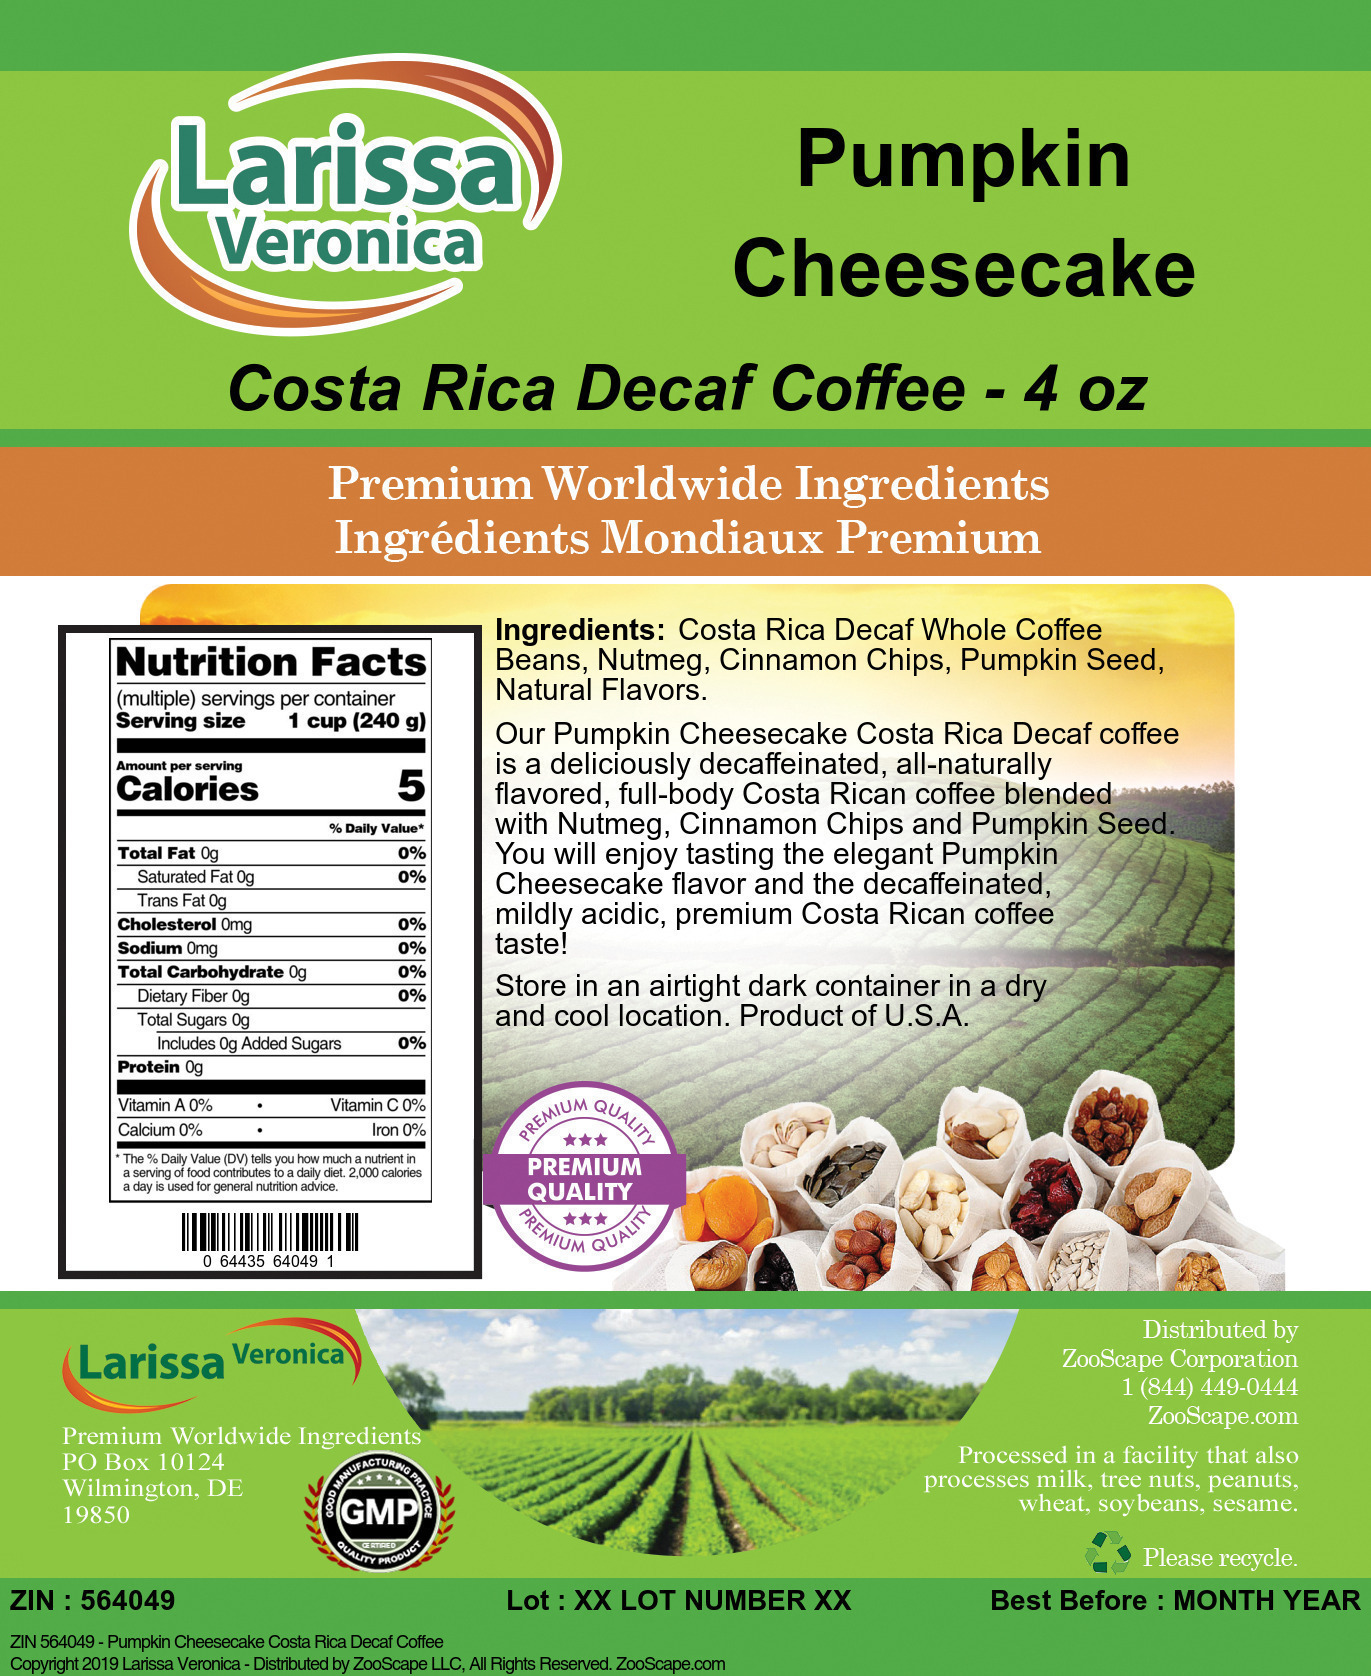 Pumpkin Cheesecake Costa Rica Decaf Coffee - Label